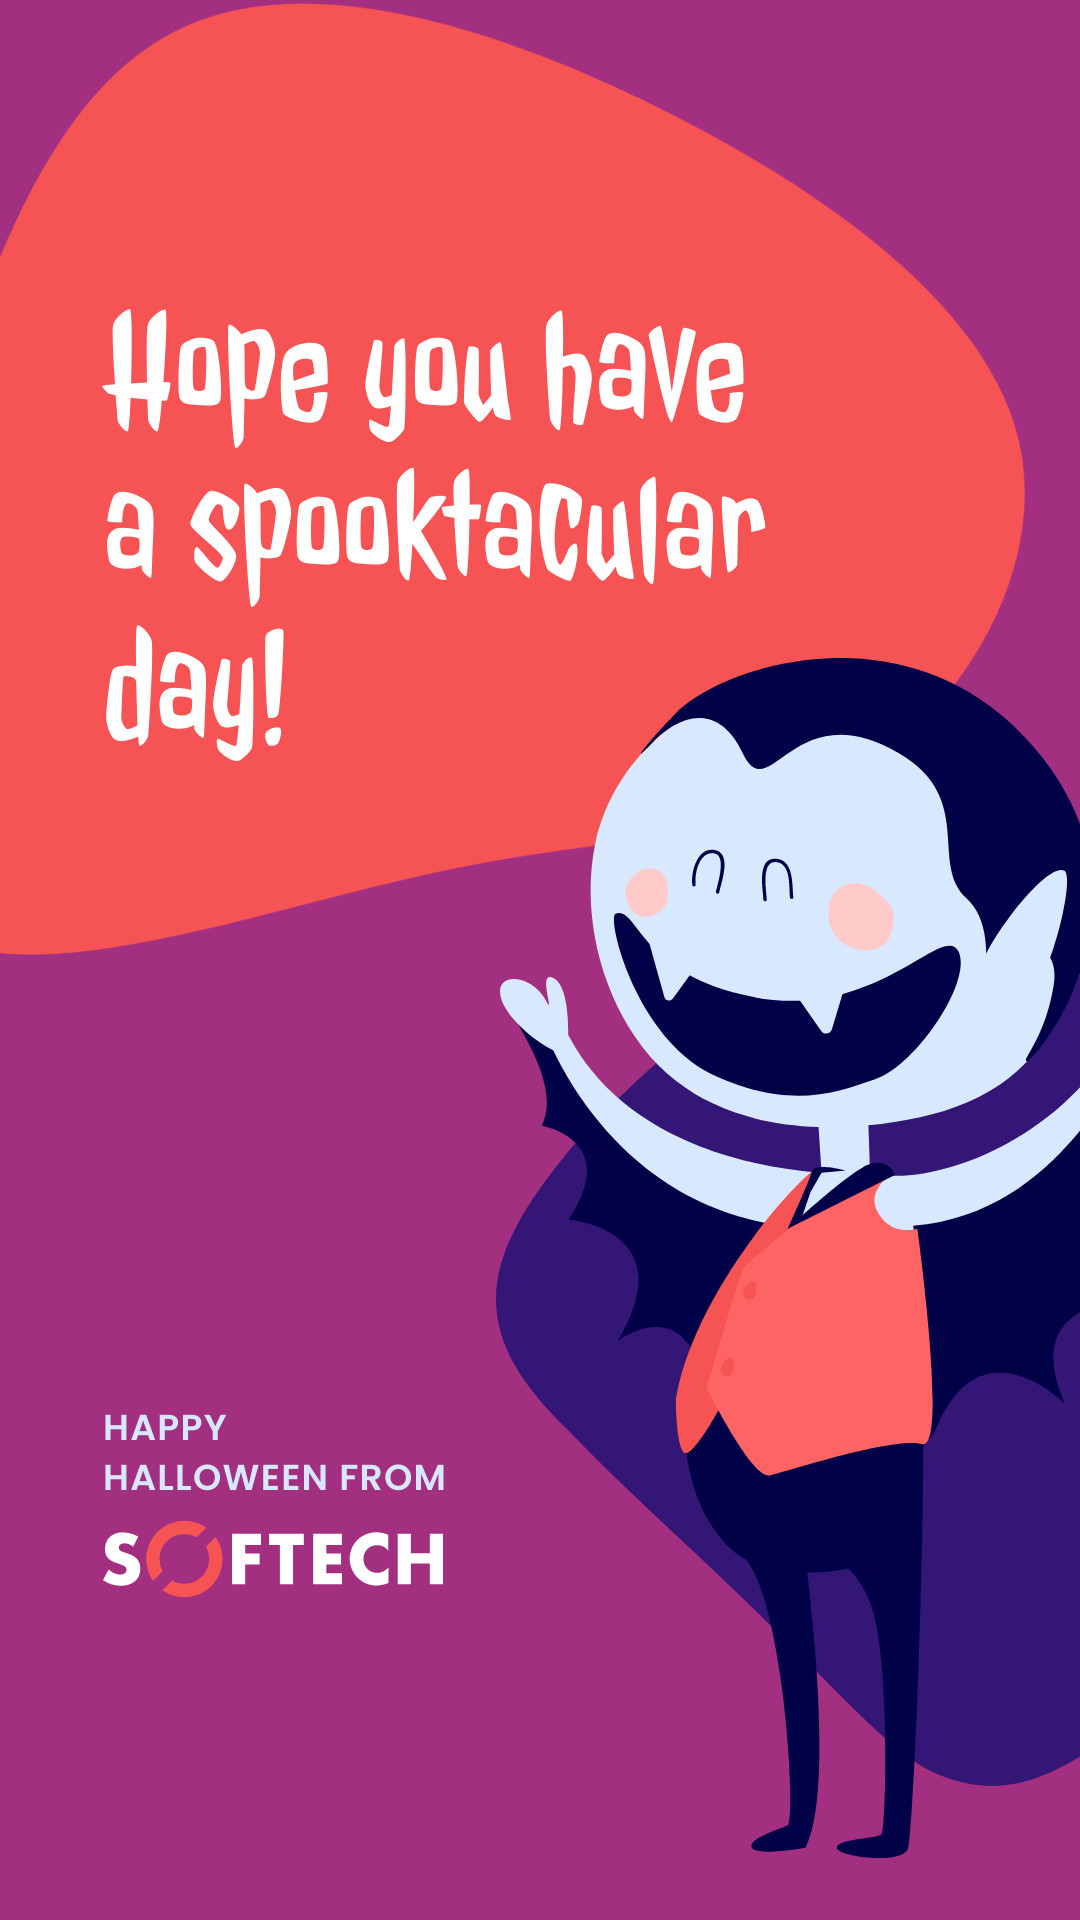 Softech Spooktacular Halloween Day Facebook Cover 820x360